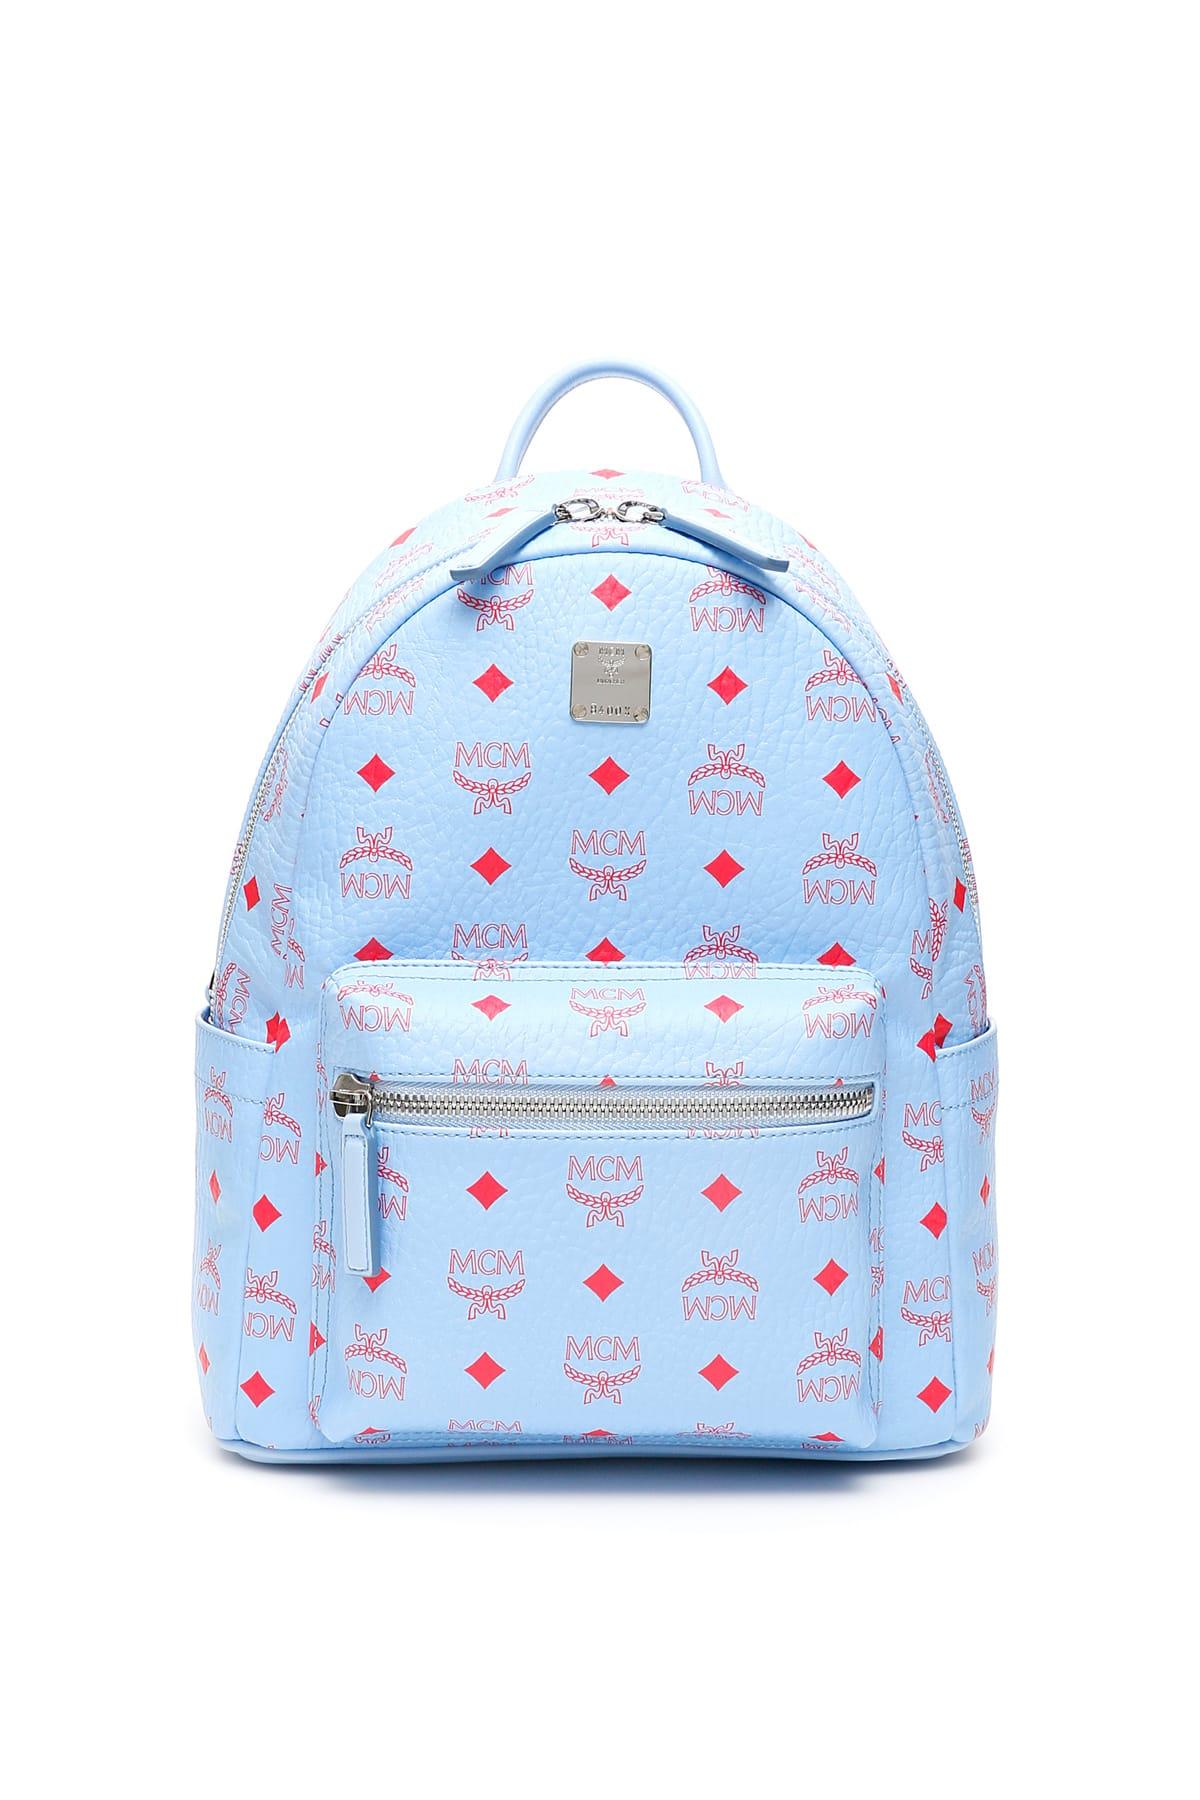 MCM Small Visetos Stark Backpack - Blue Backpacks, Handbags - W3028692